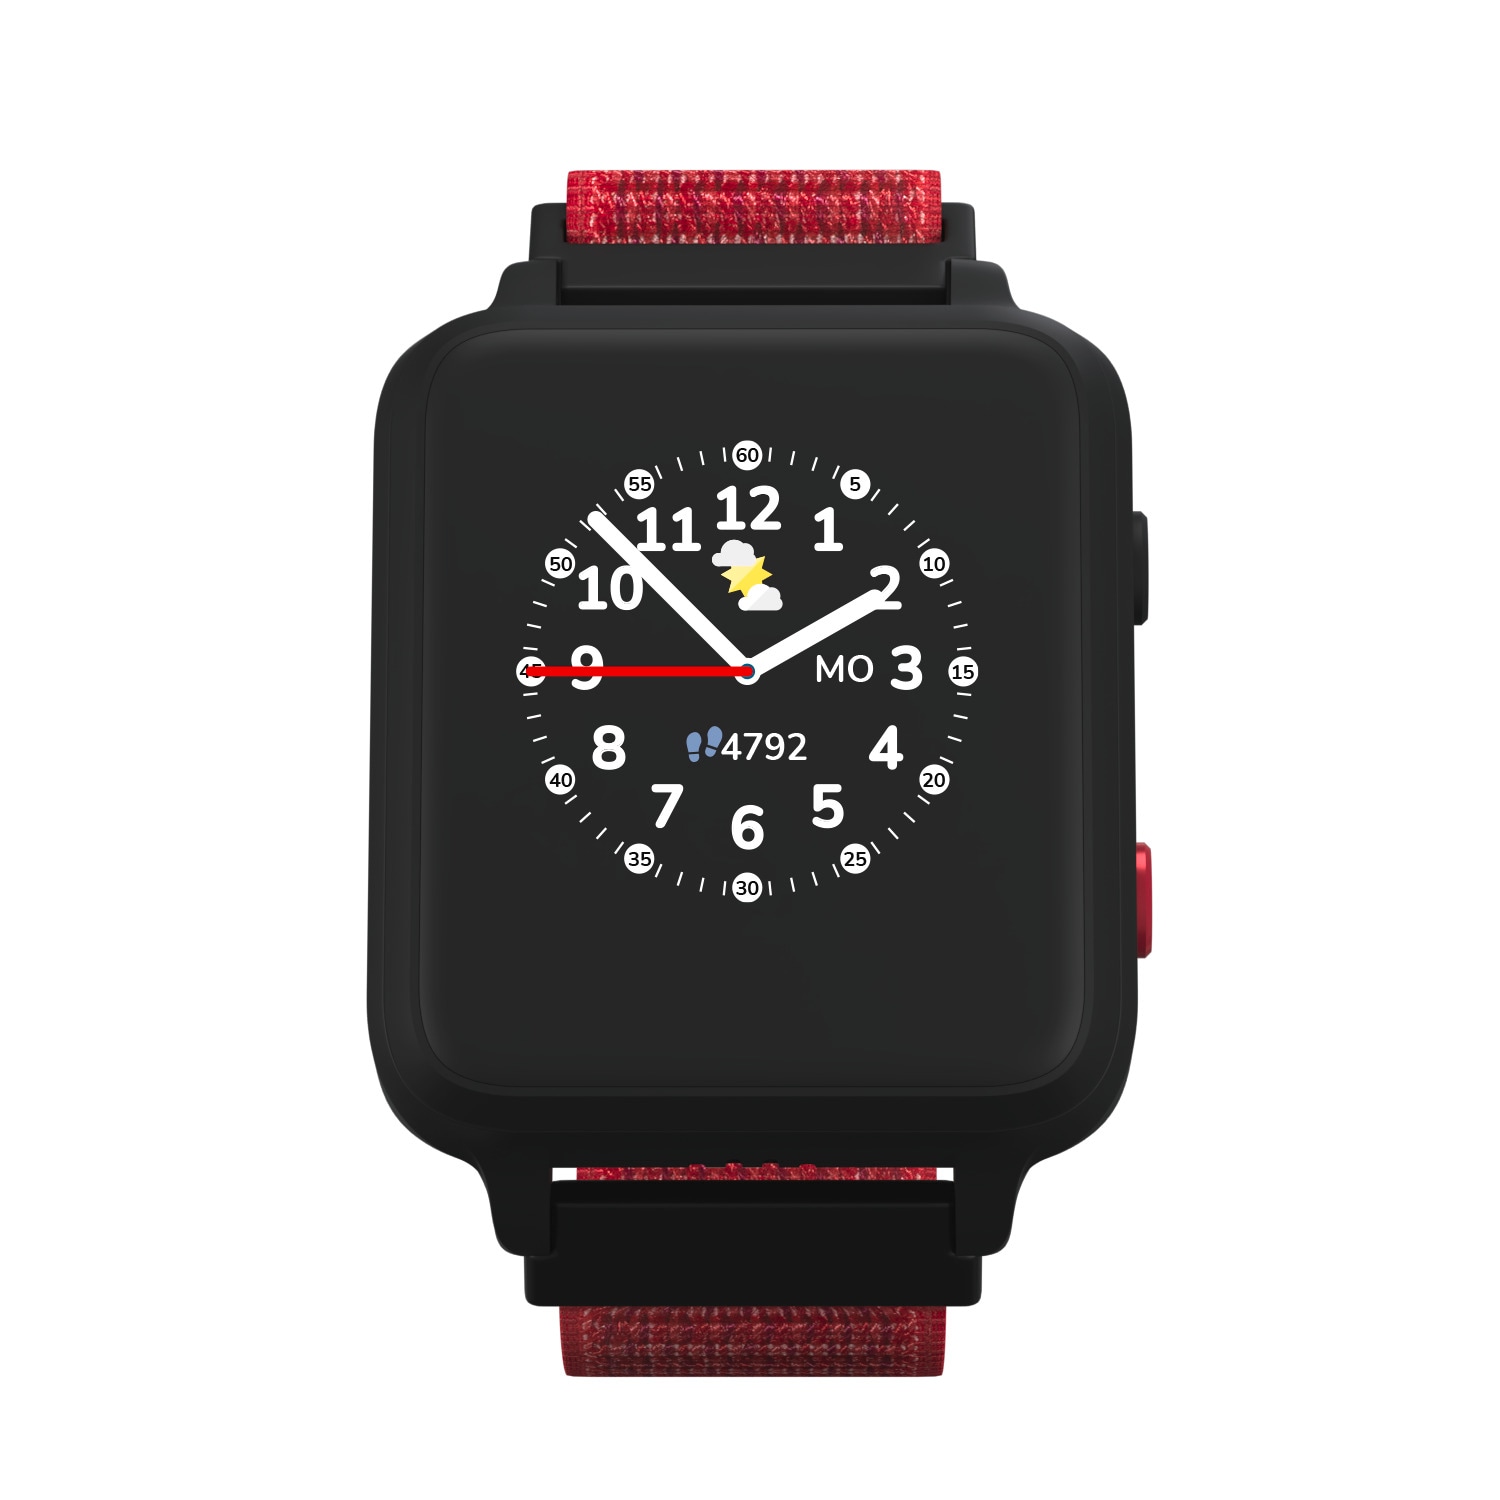 ANIO Smartwatch »5s«